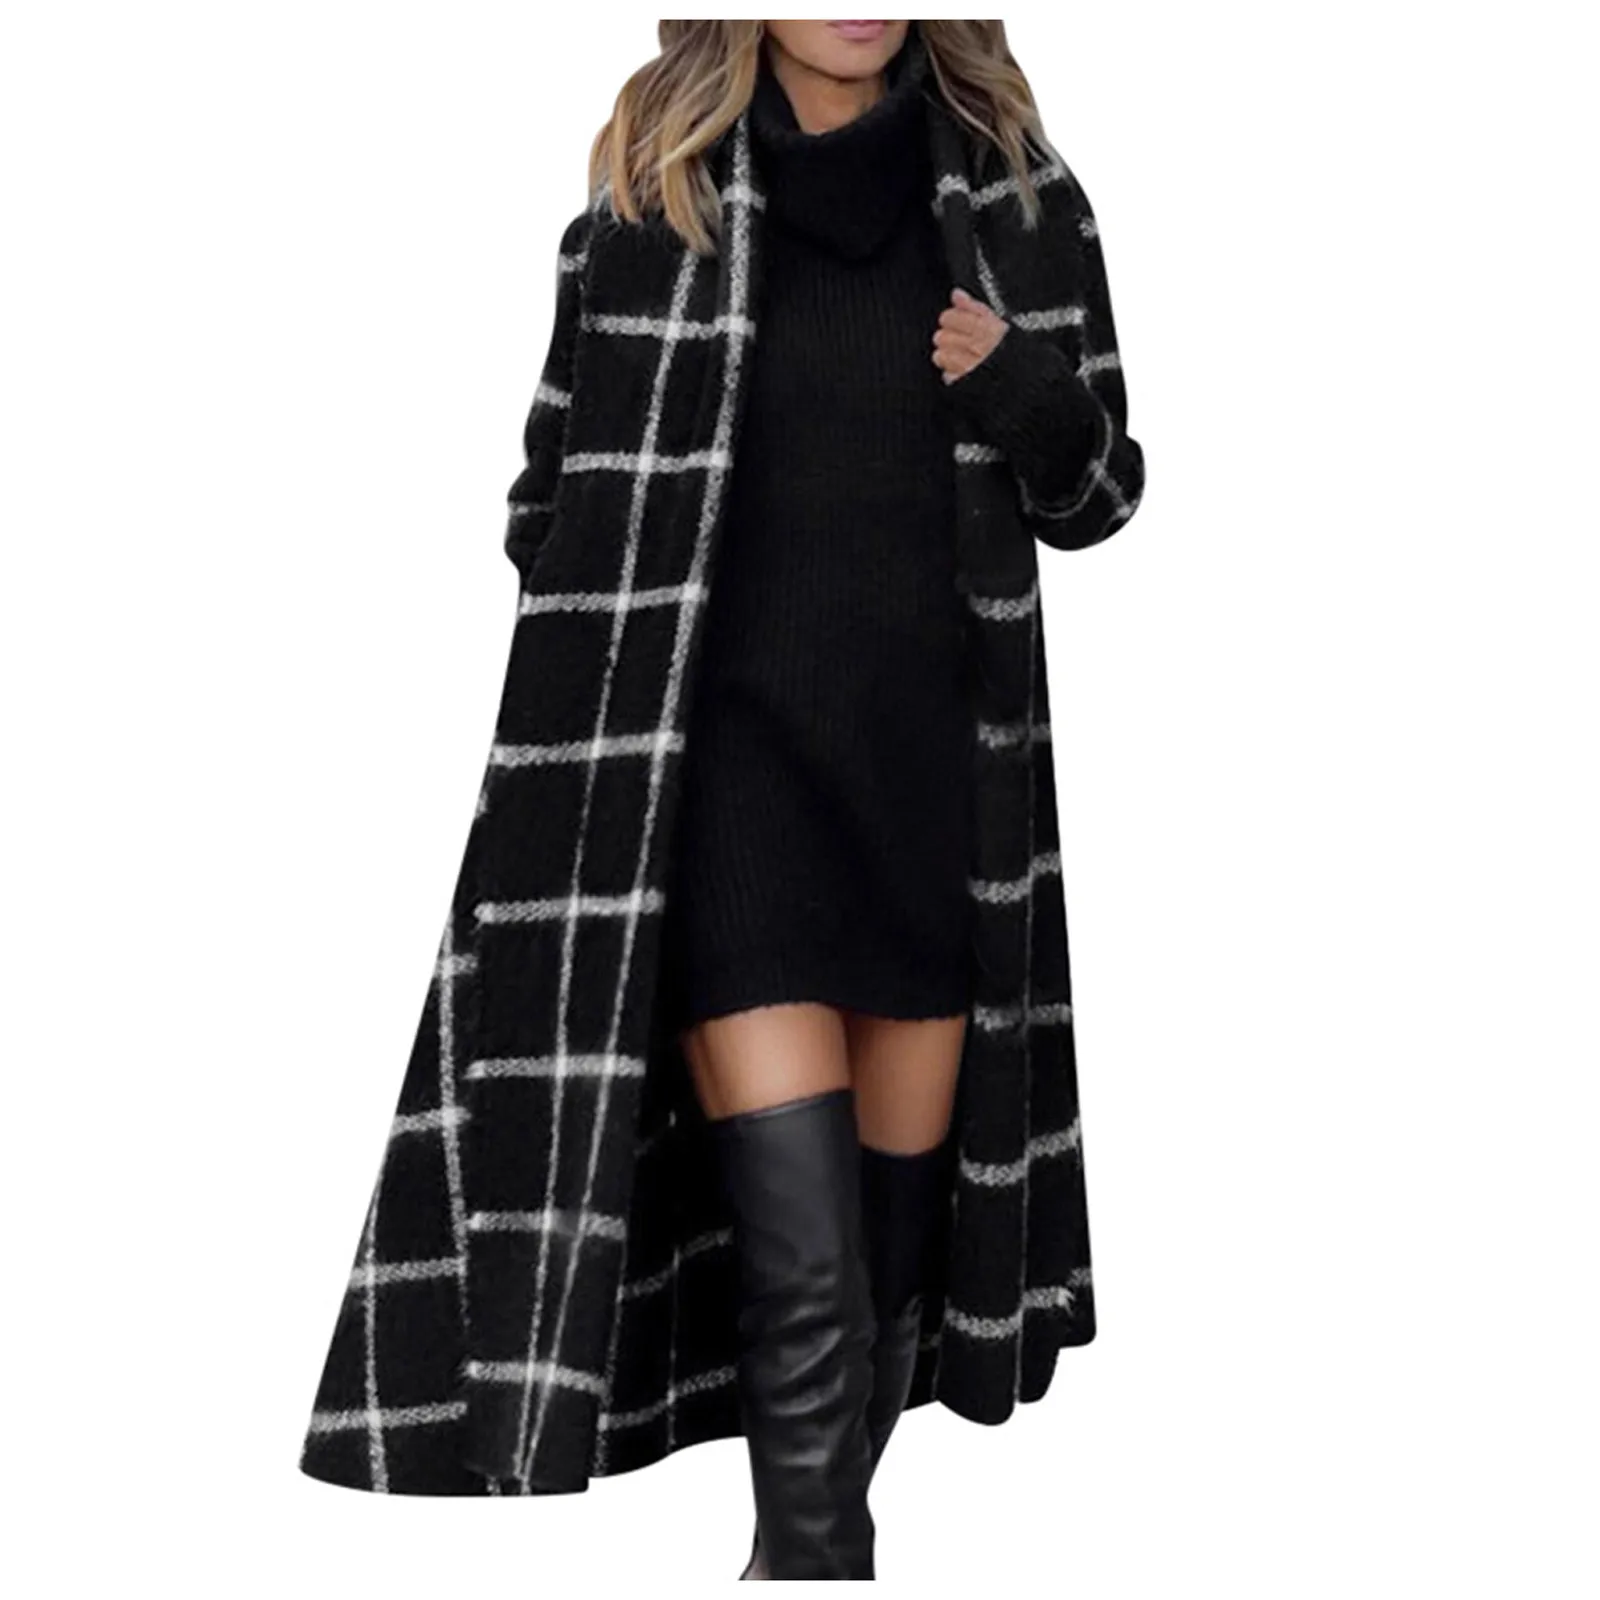 Fashion Women Plaid Winter Hooded Coat Trench Jacket Warm Slim Long Overcoat Outwear Autumn 2020 New Parkas Jackets Korean Style | Женская